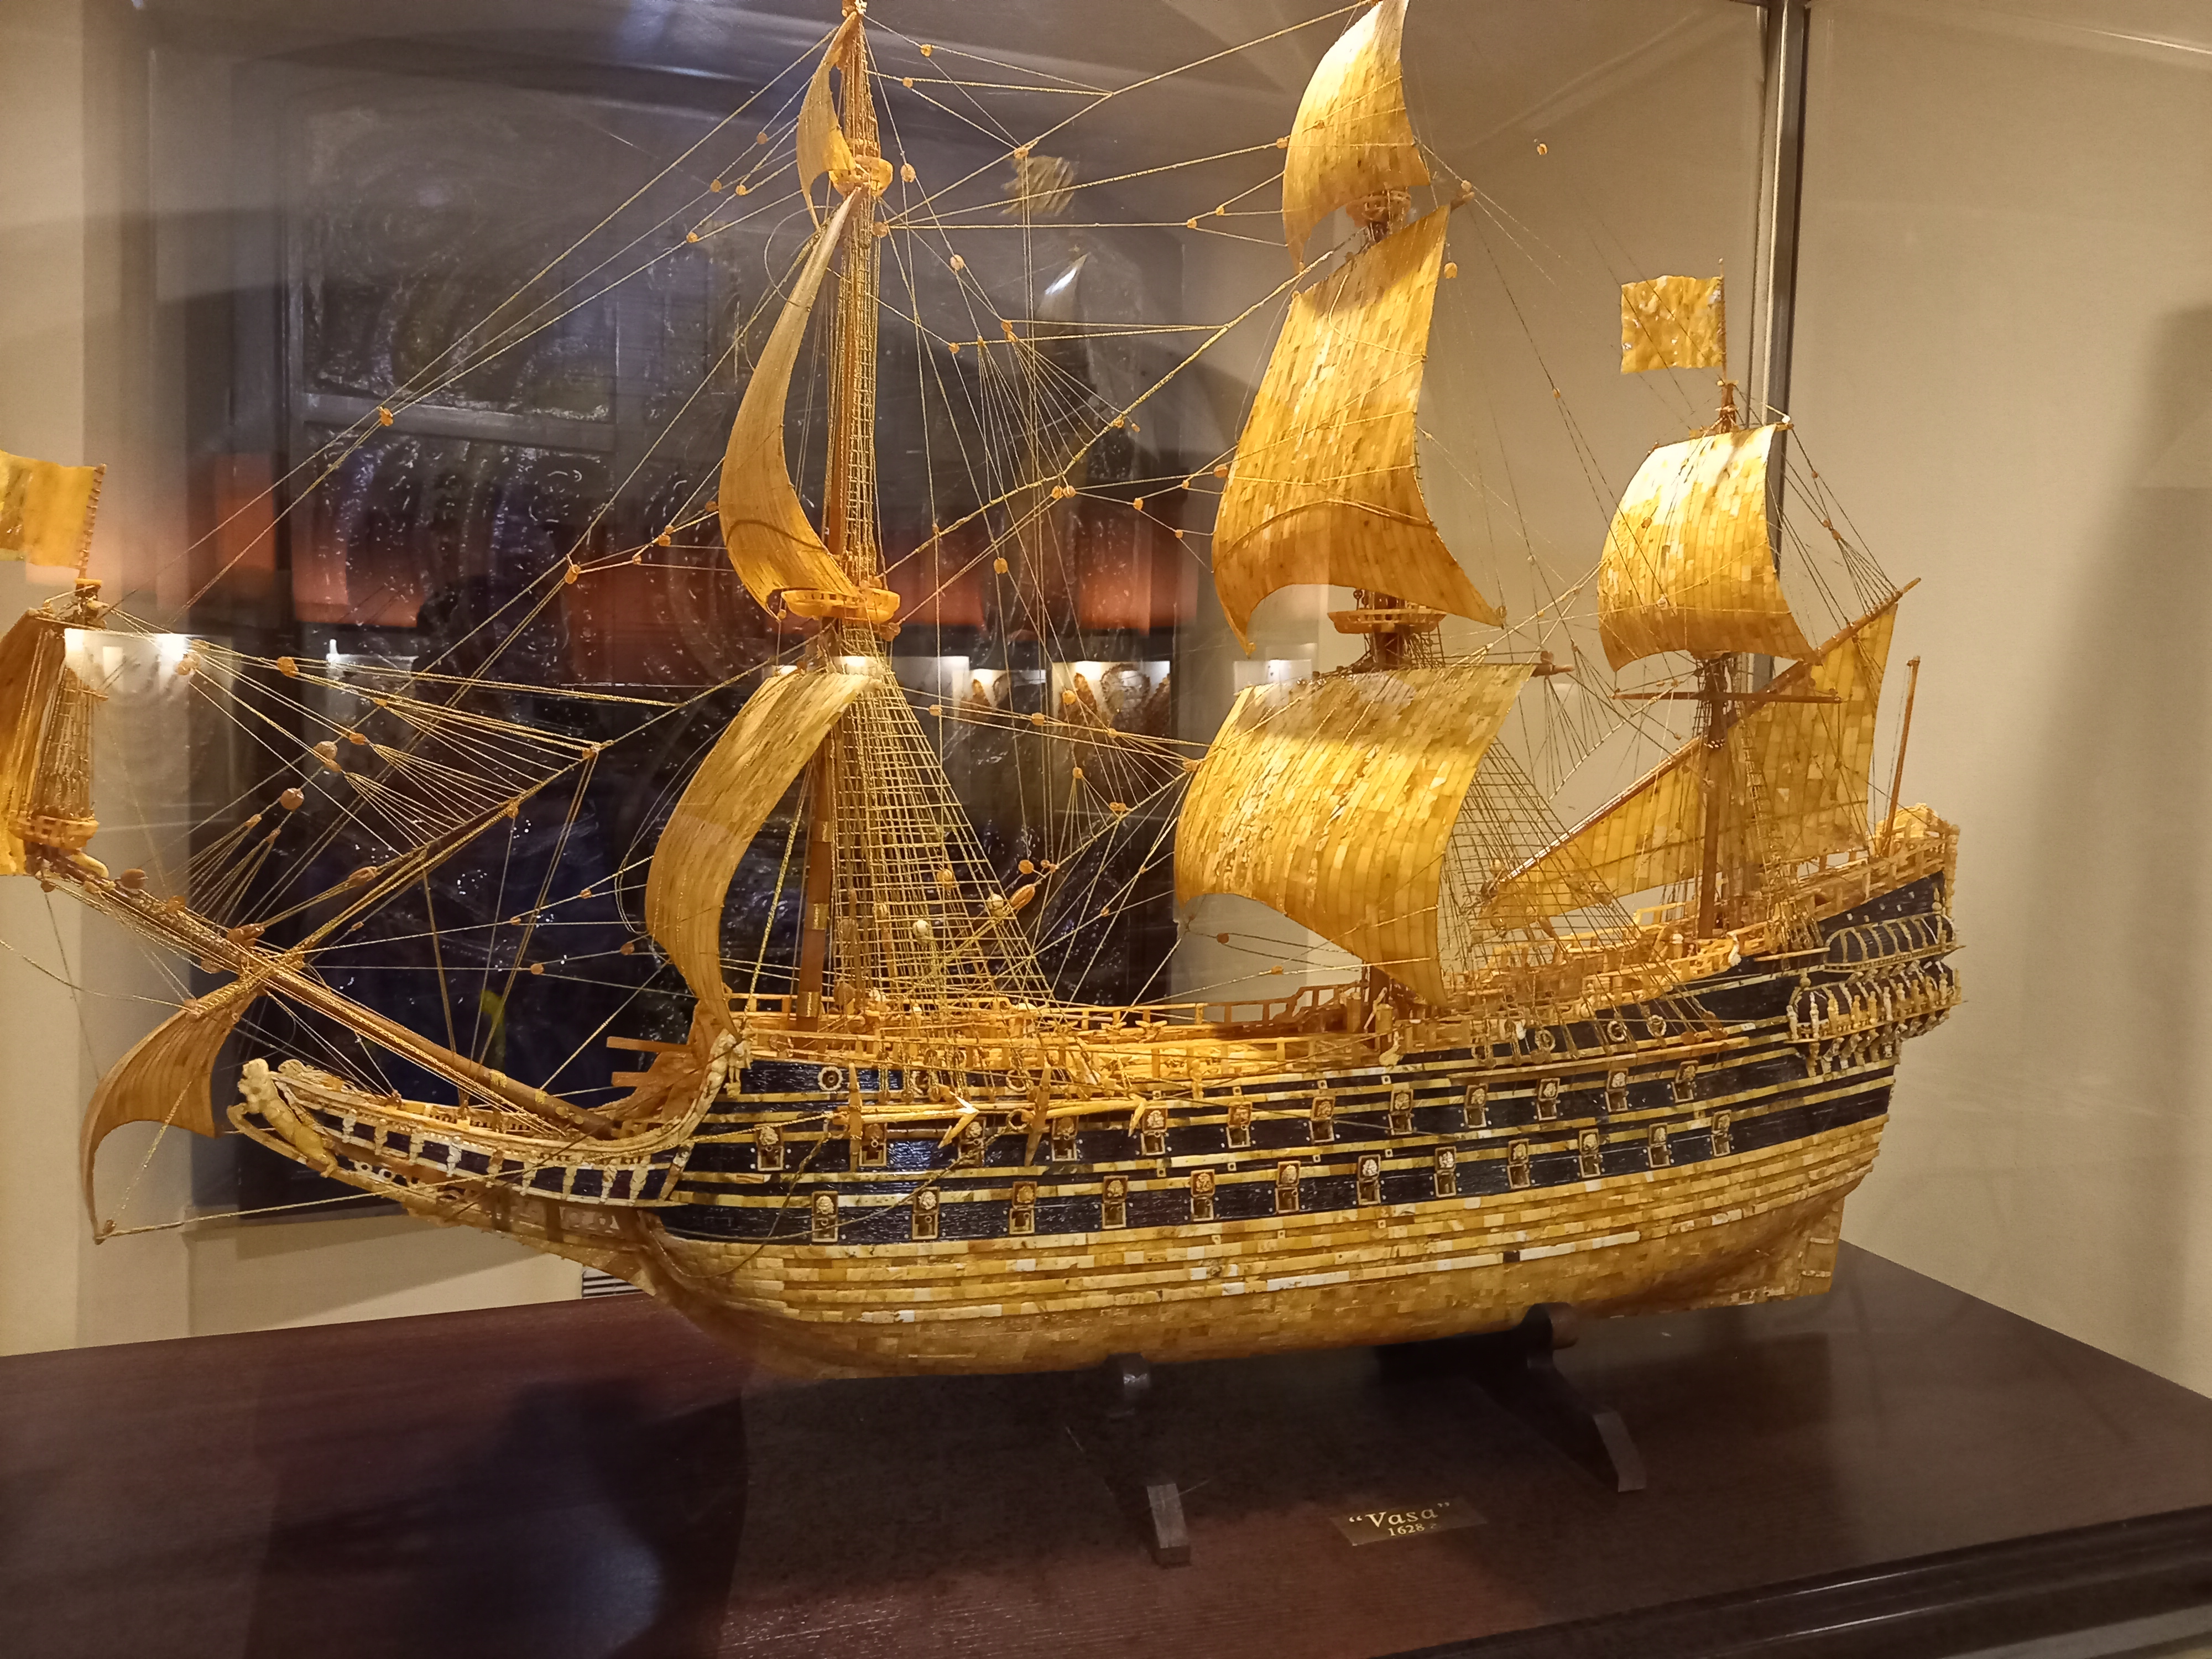 Модель флагмана шведского флота, корабля "Васса". Того, что сразу затонул.